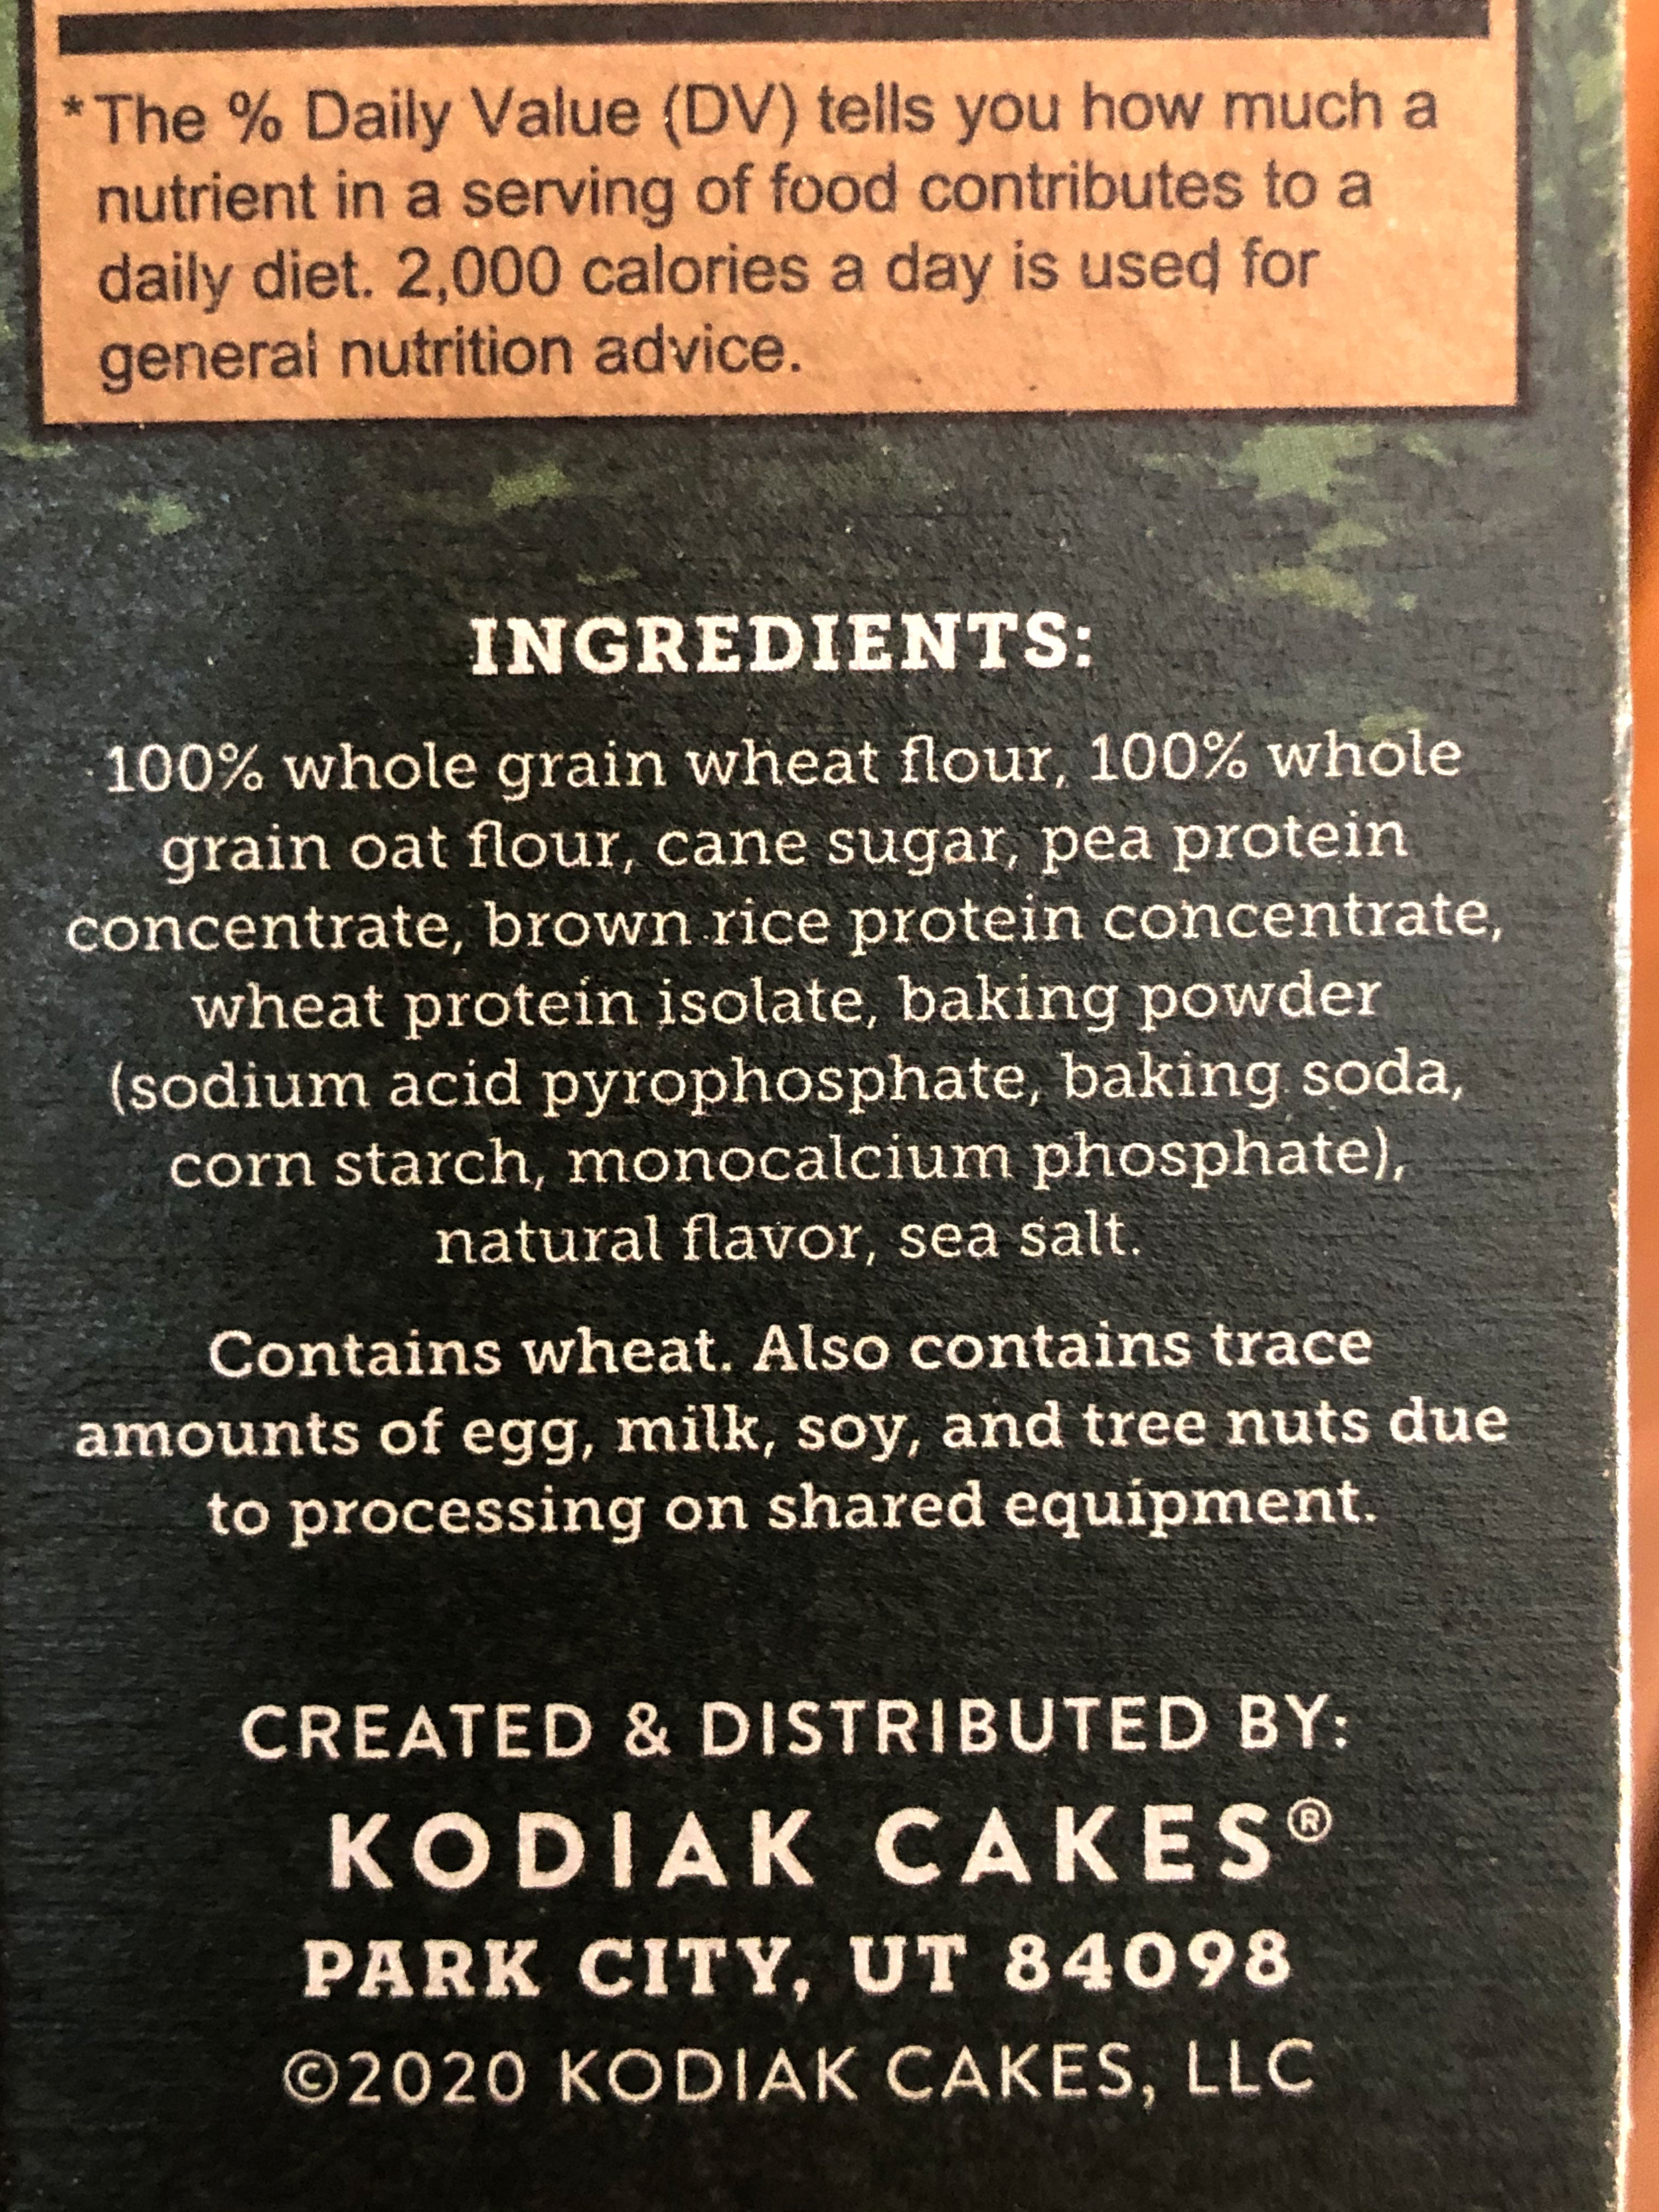 Kodiak Cakes  Park City UT